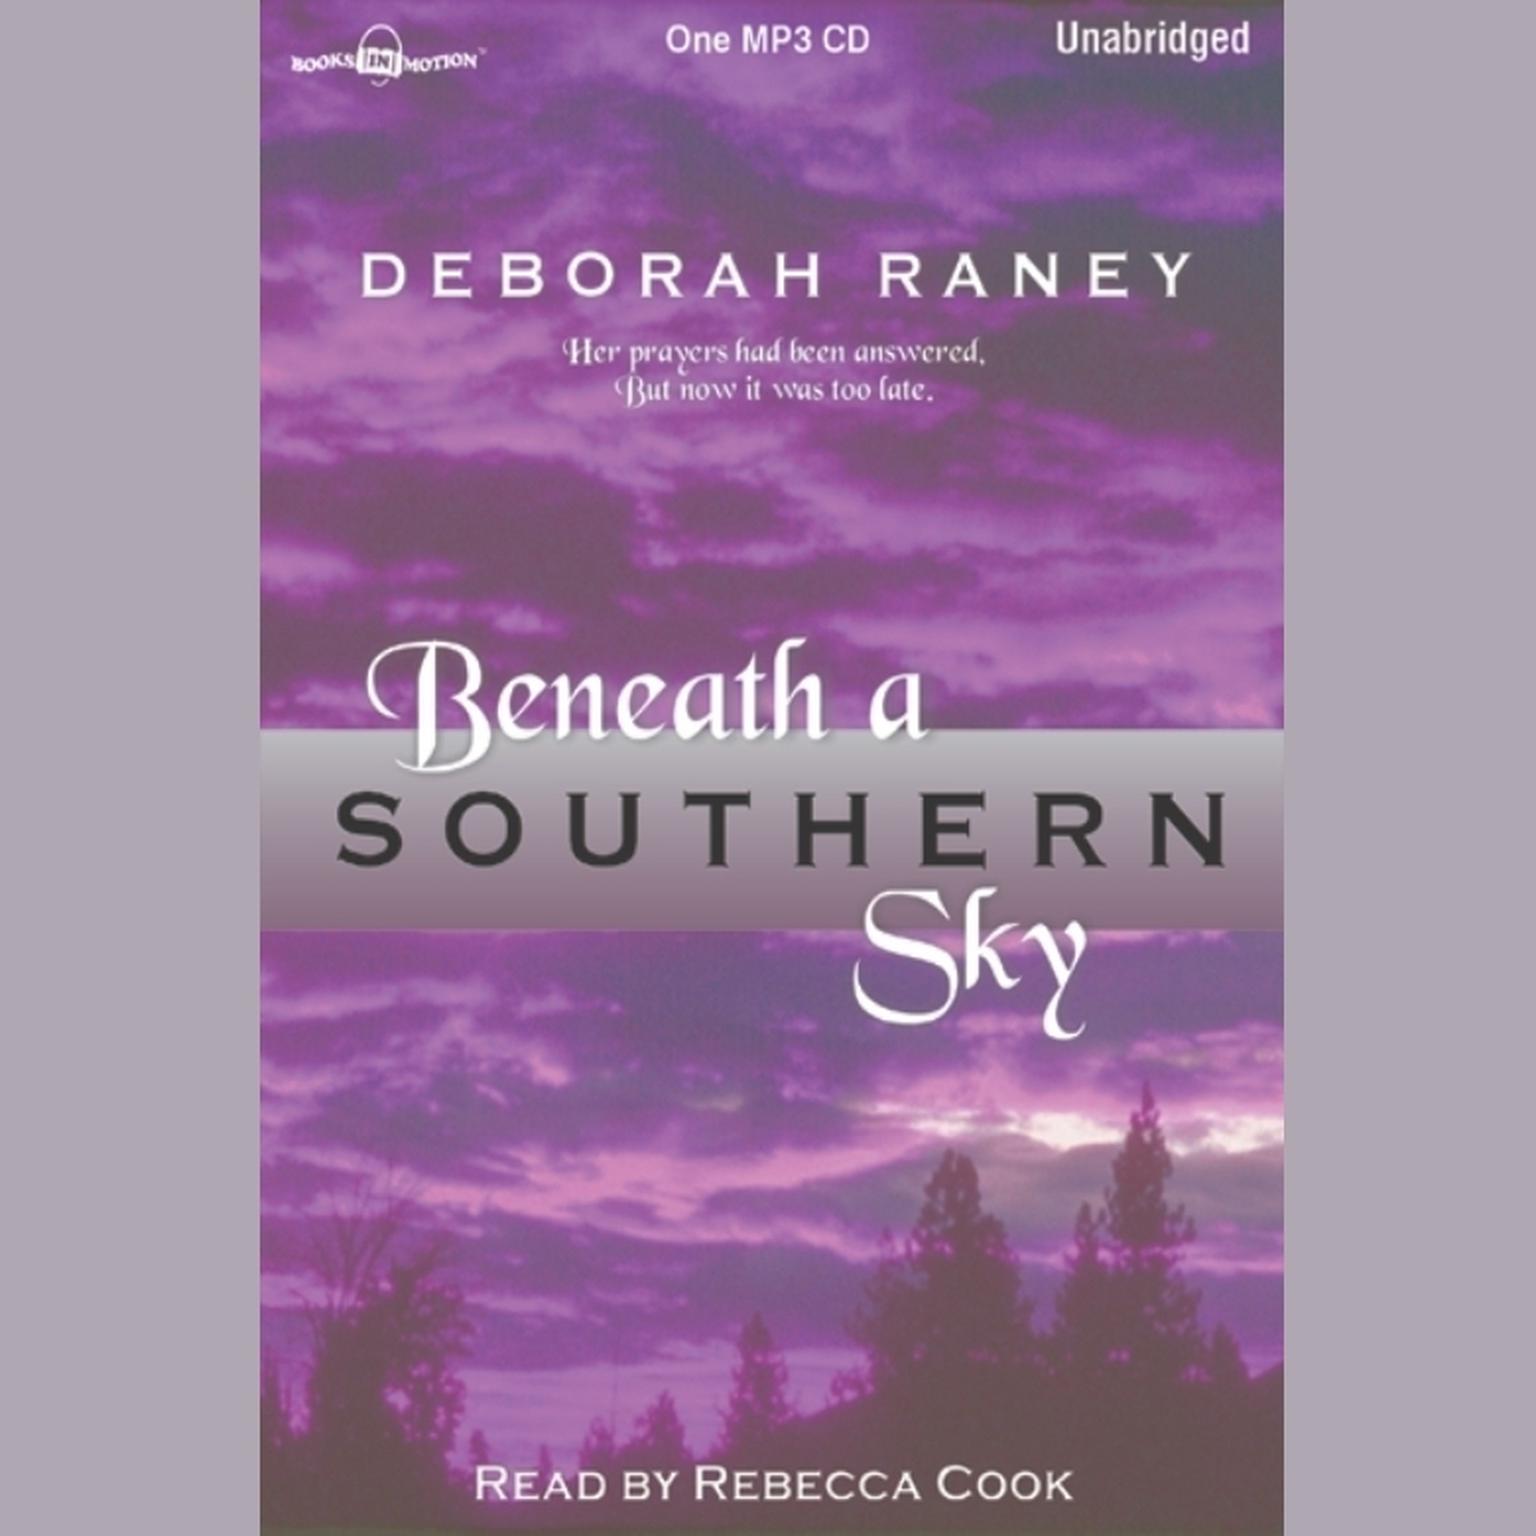 Beneath a Southern Sky Audiobook, by Deborah Raney